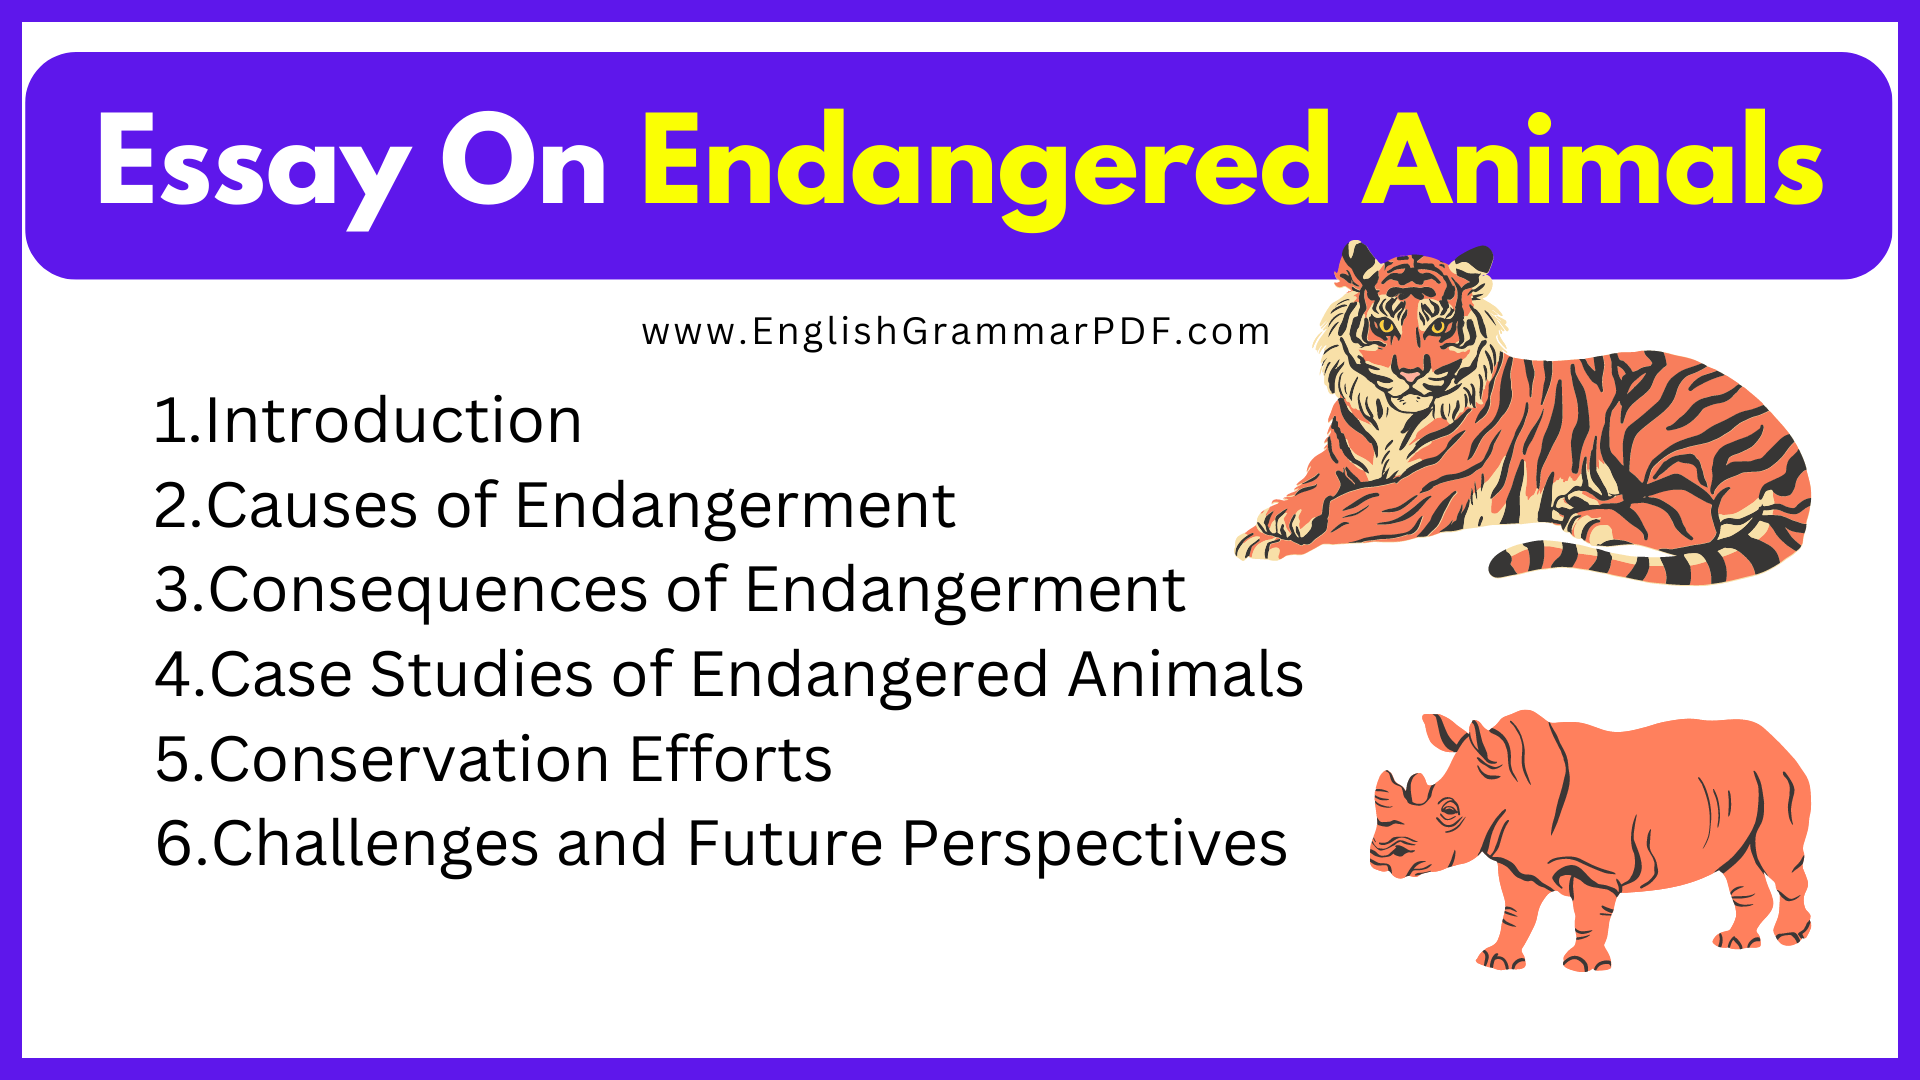 Essay On Endangered Animals